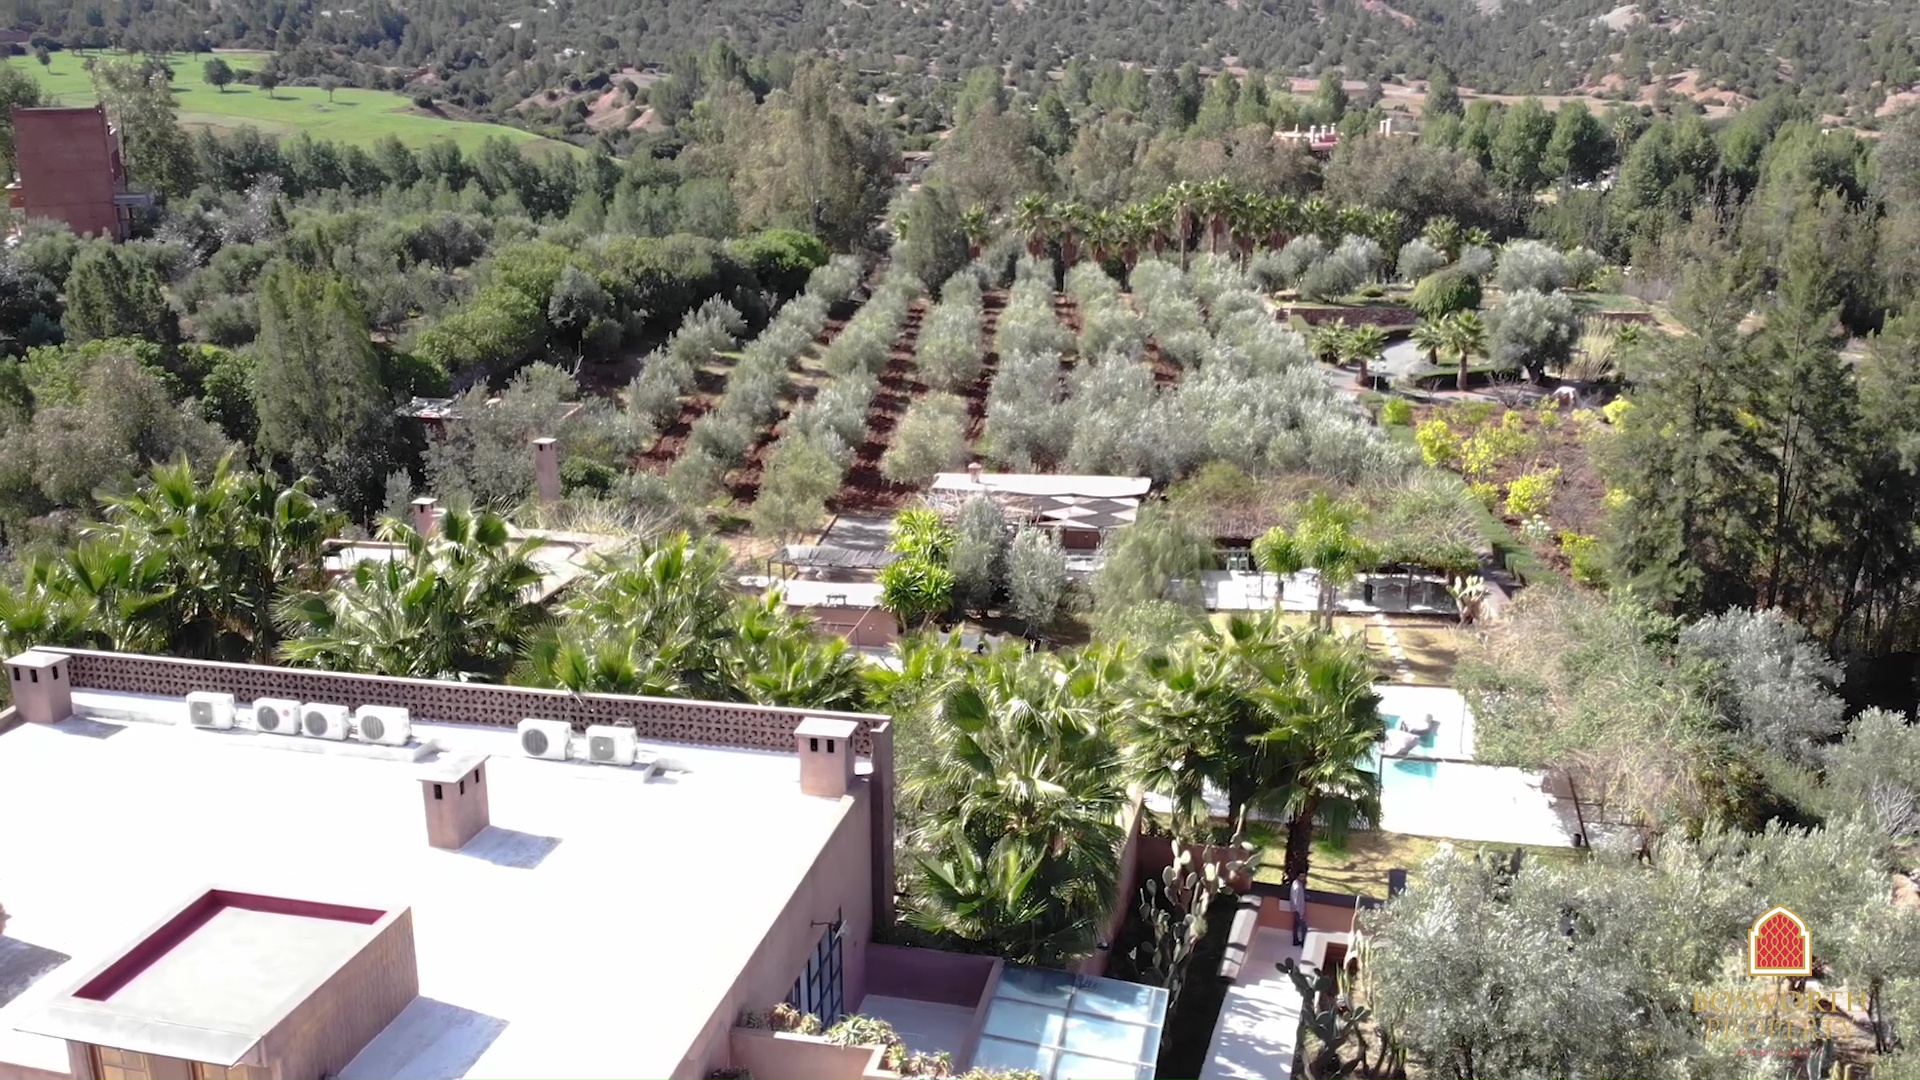 Lyx Eco Resort Till Salu Marrakech Atlasbergen - Lyxig Fastighet Marrakech - Villa Till Salu Marrakech - Marrakech Fastigheter - Immobilier Marrakech